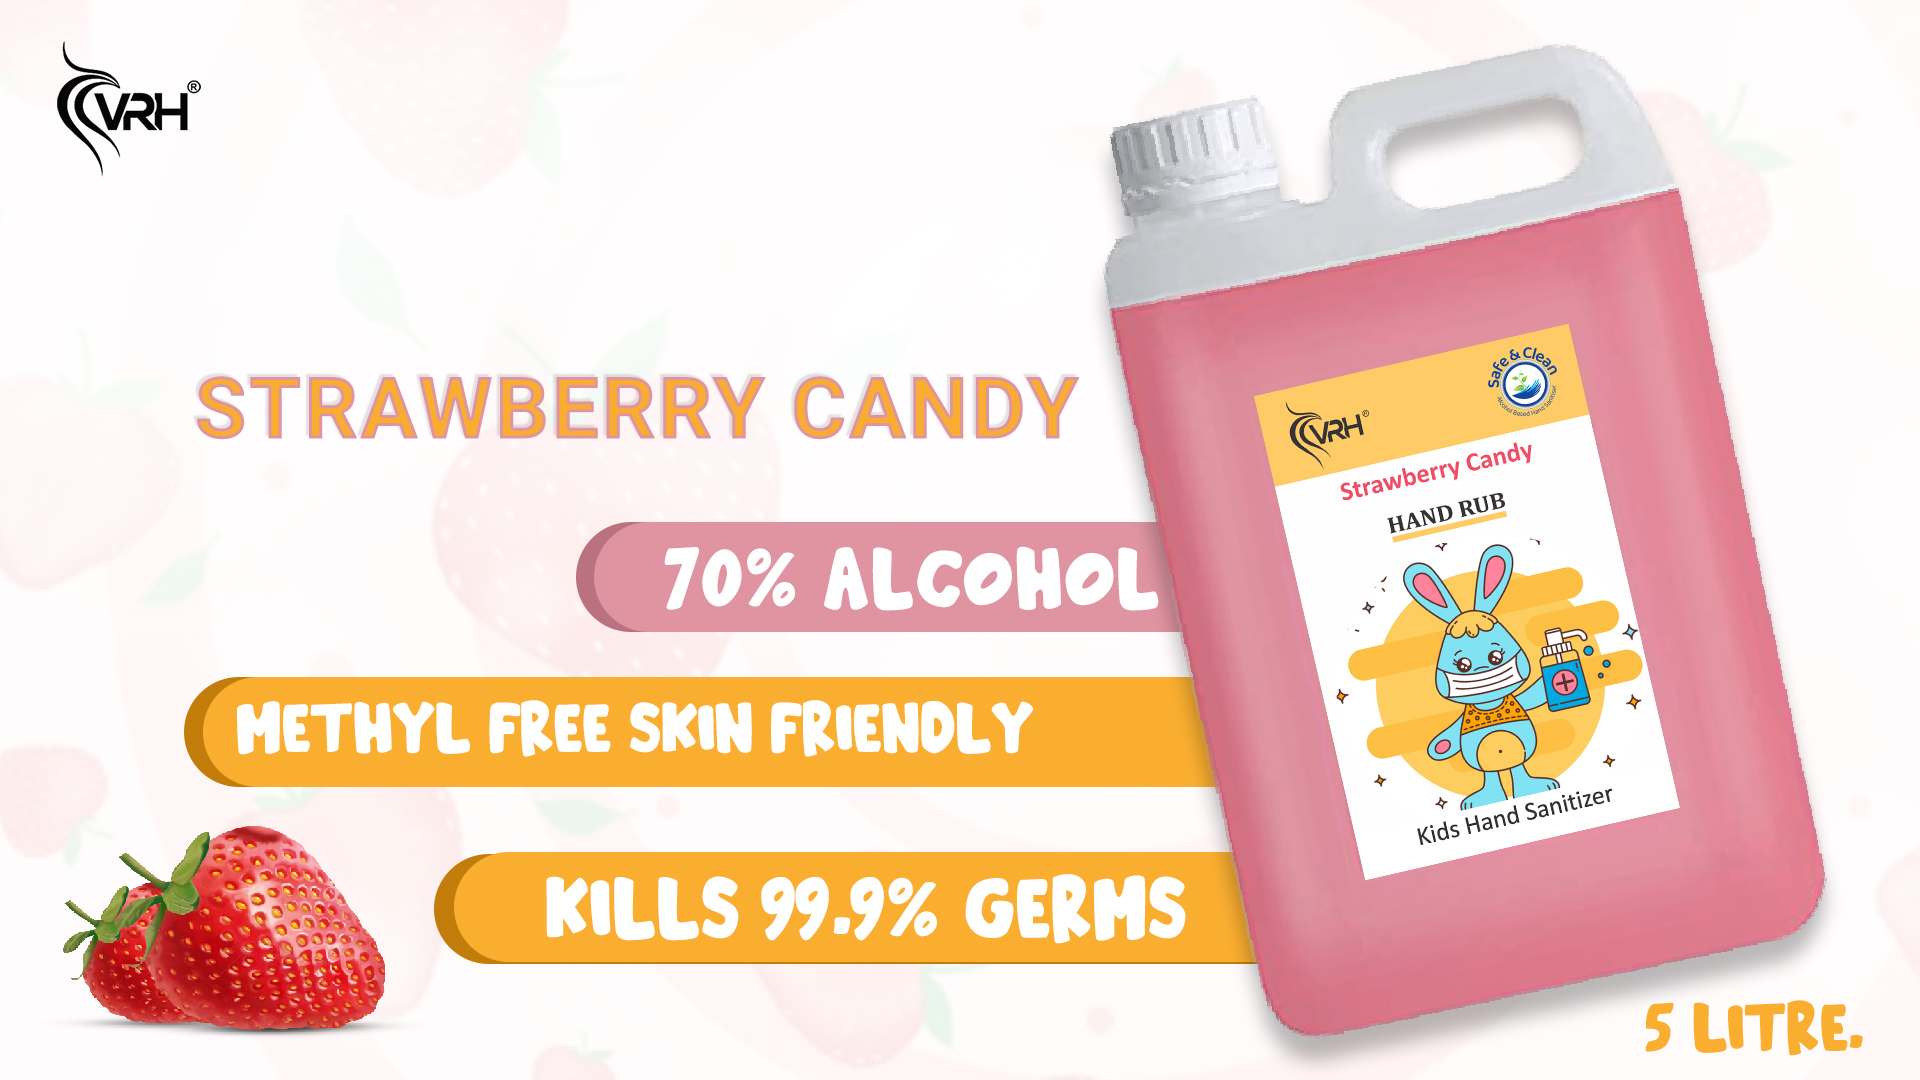 Strawberry Hand Rub Sanitizer Combo Pack